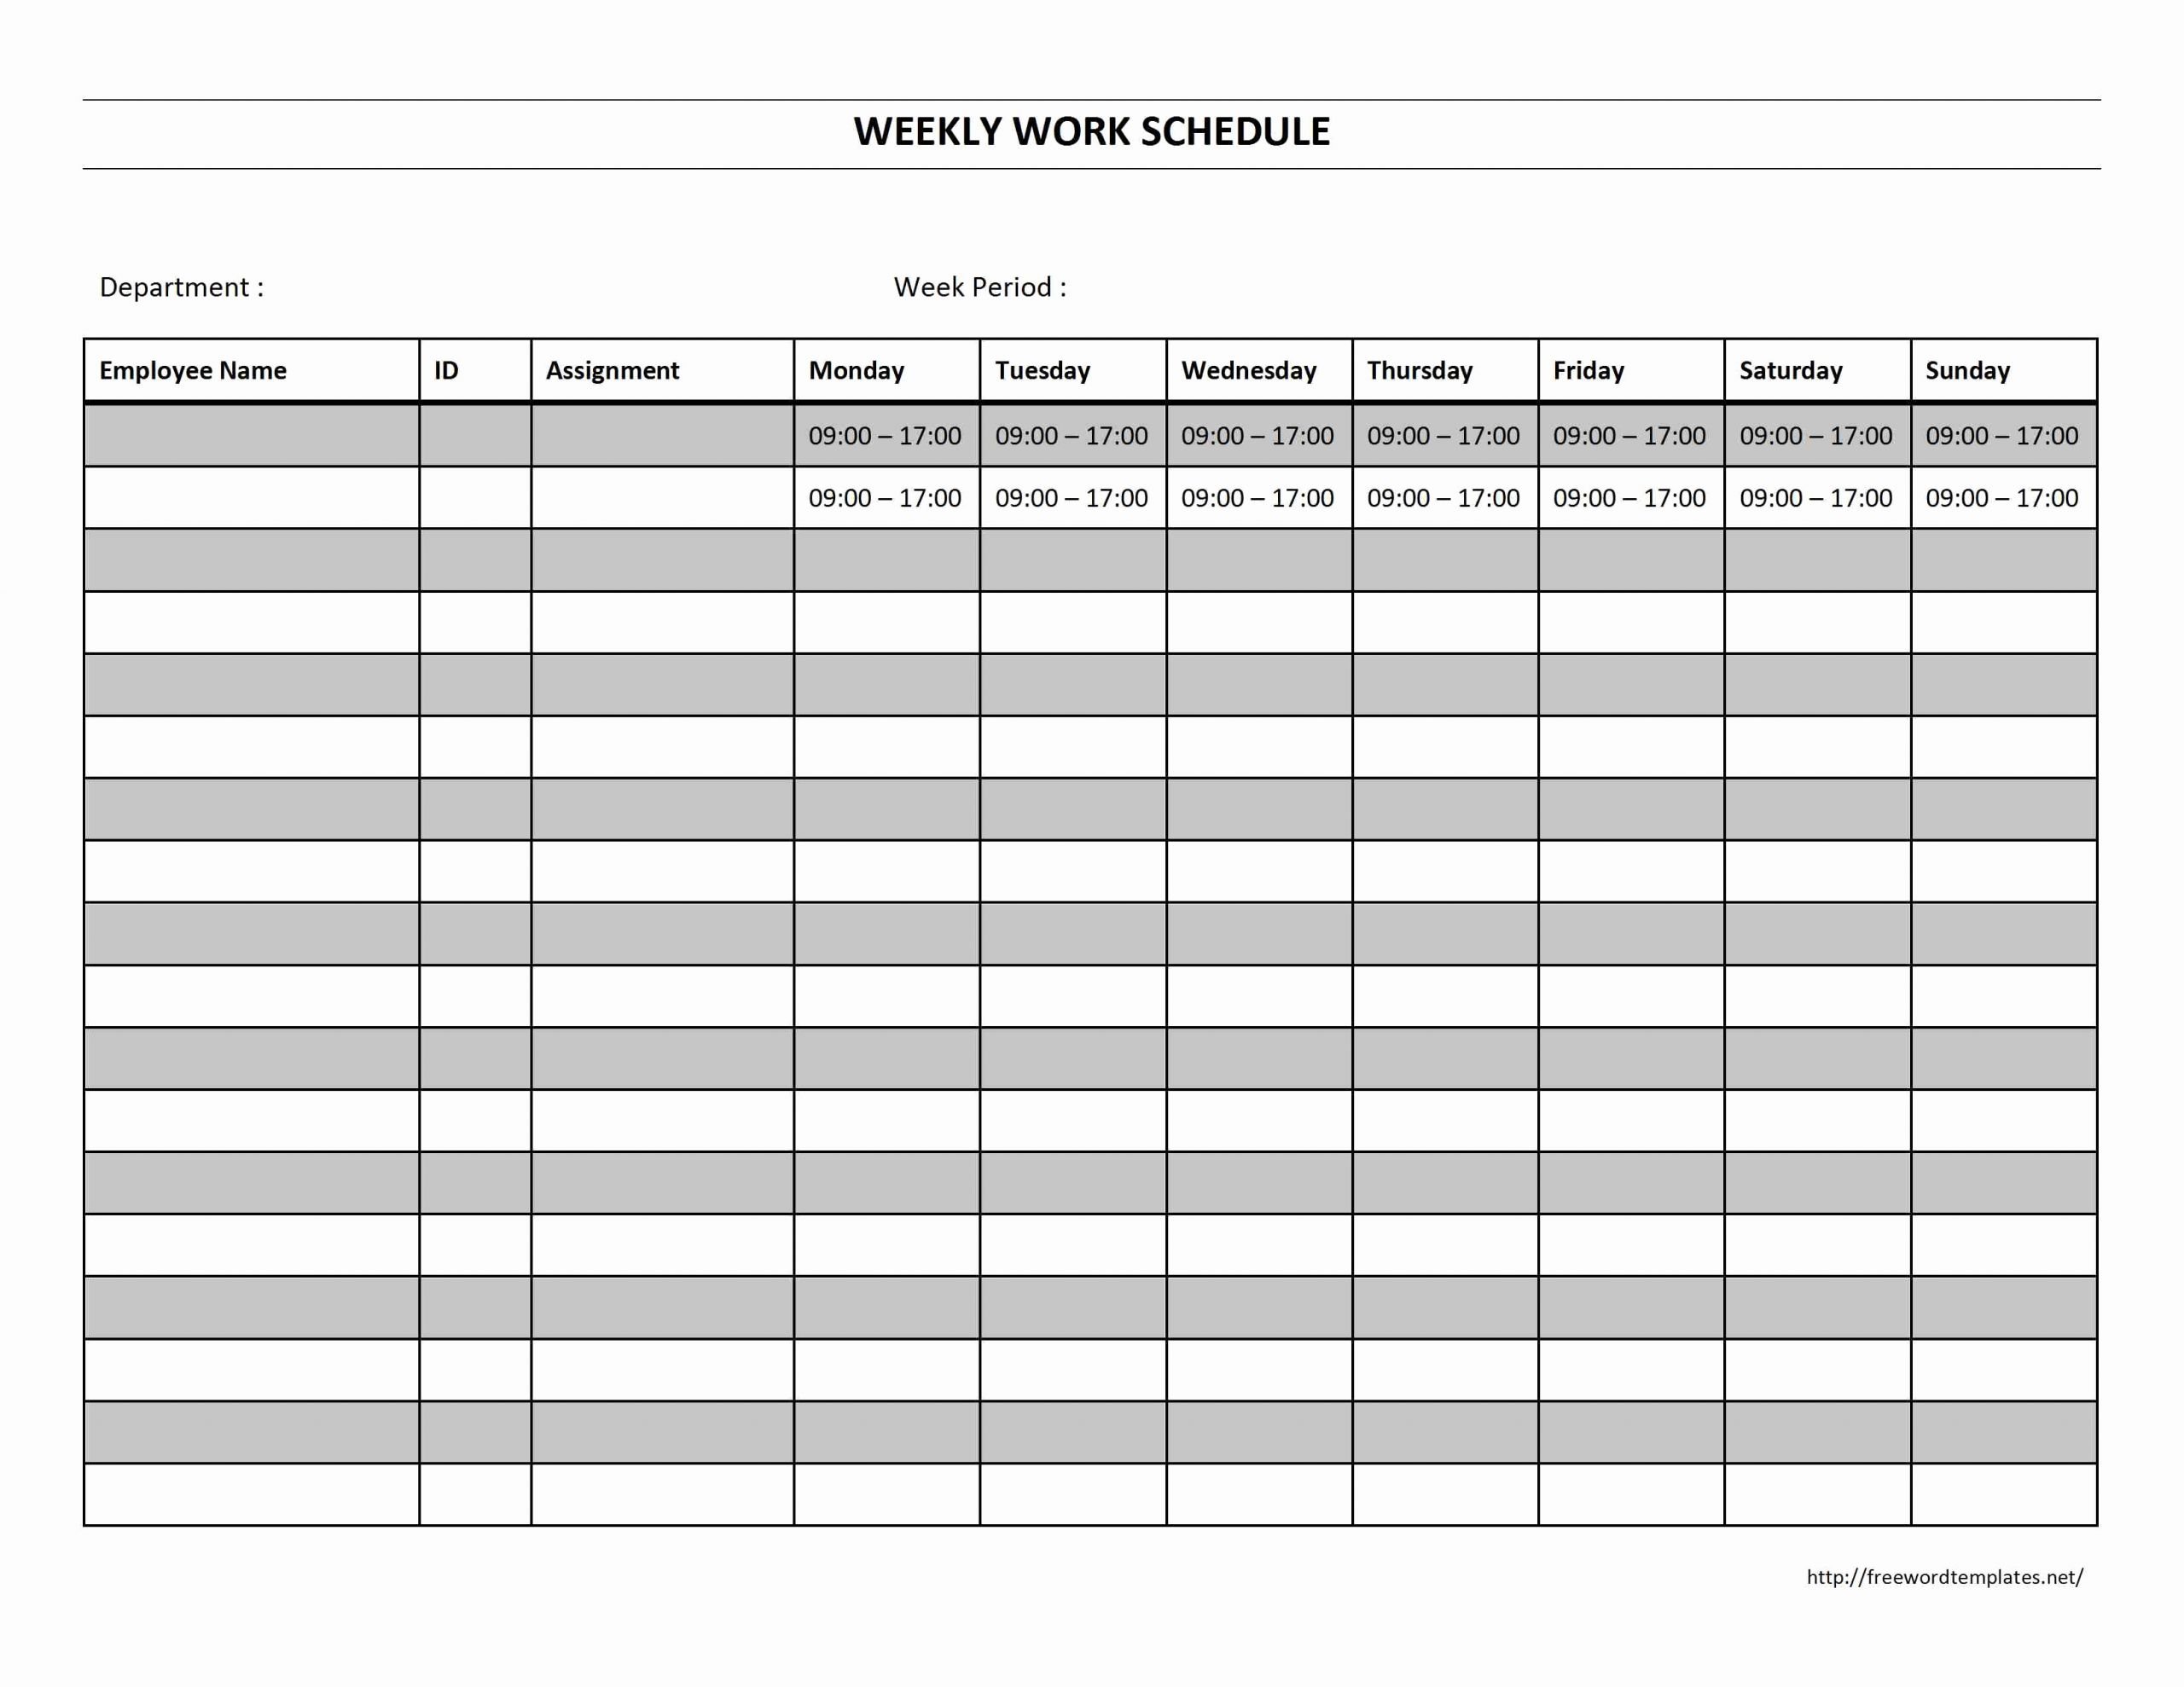 Work Schedule Template Free Inspirational Weekly Work Schedule